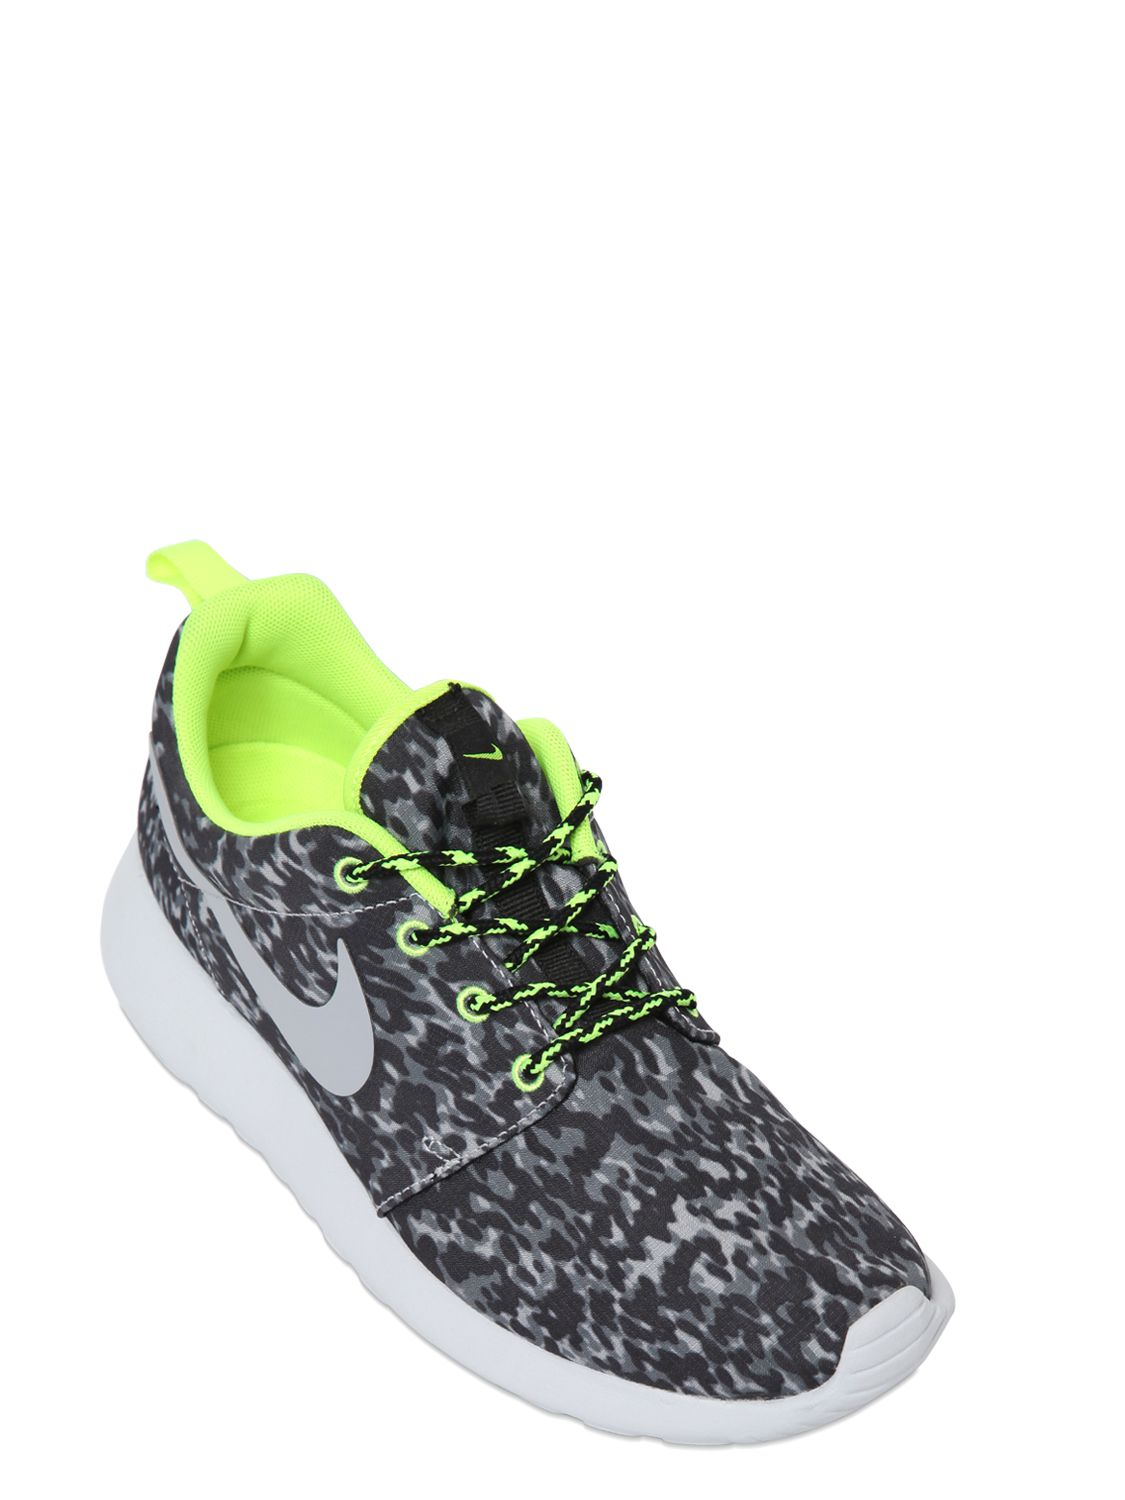 Nike Roshe Run Leopard Print Running Sneakers in Gray |